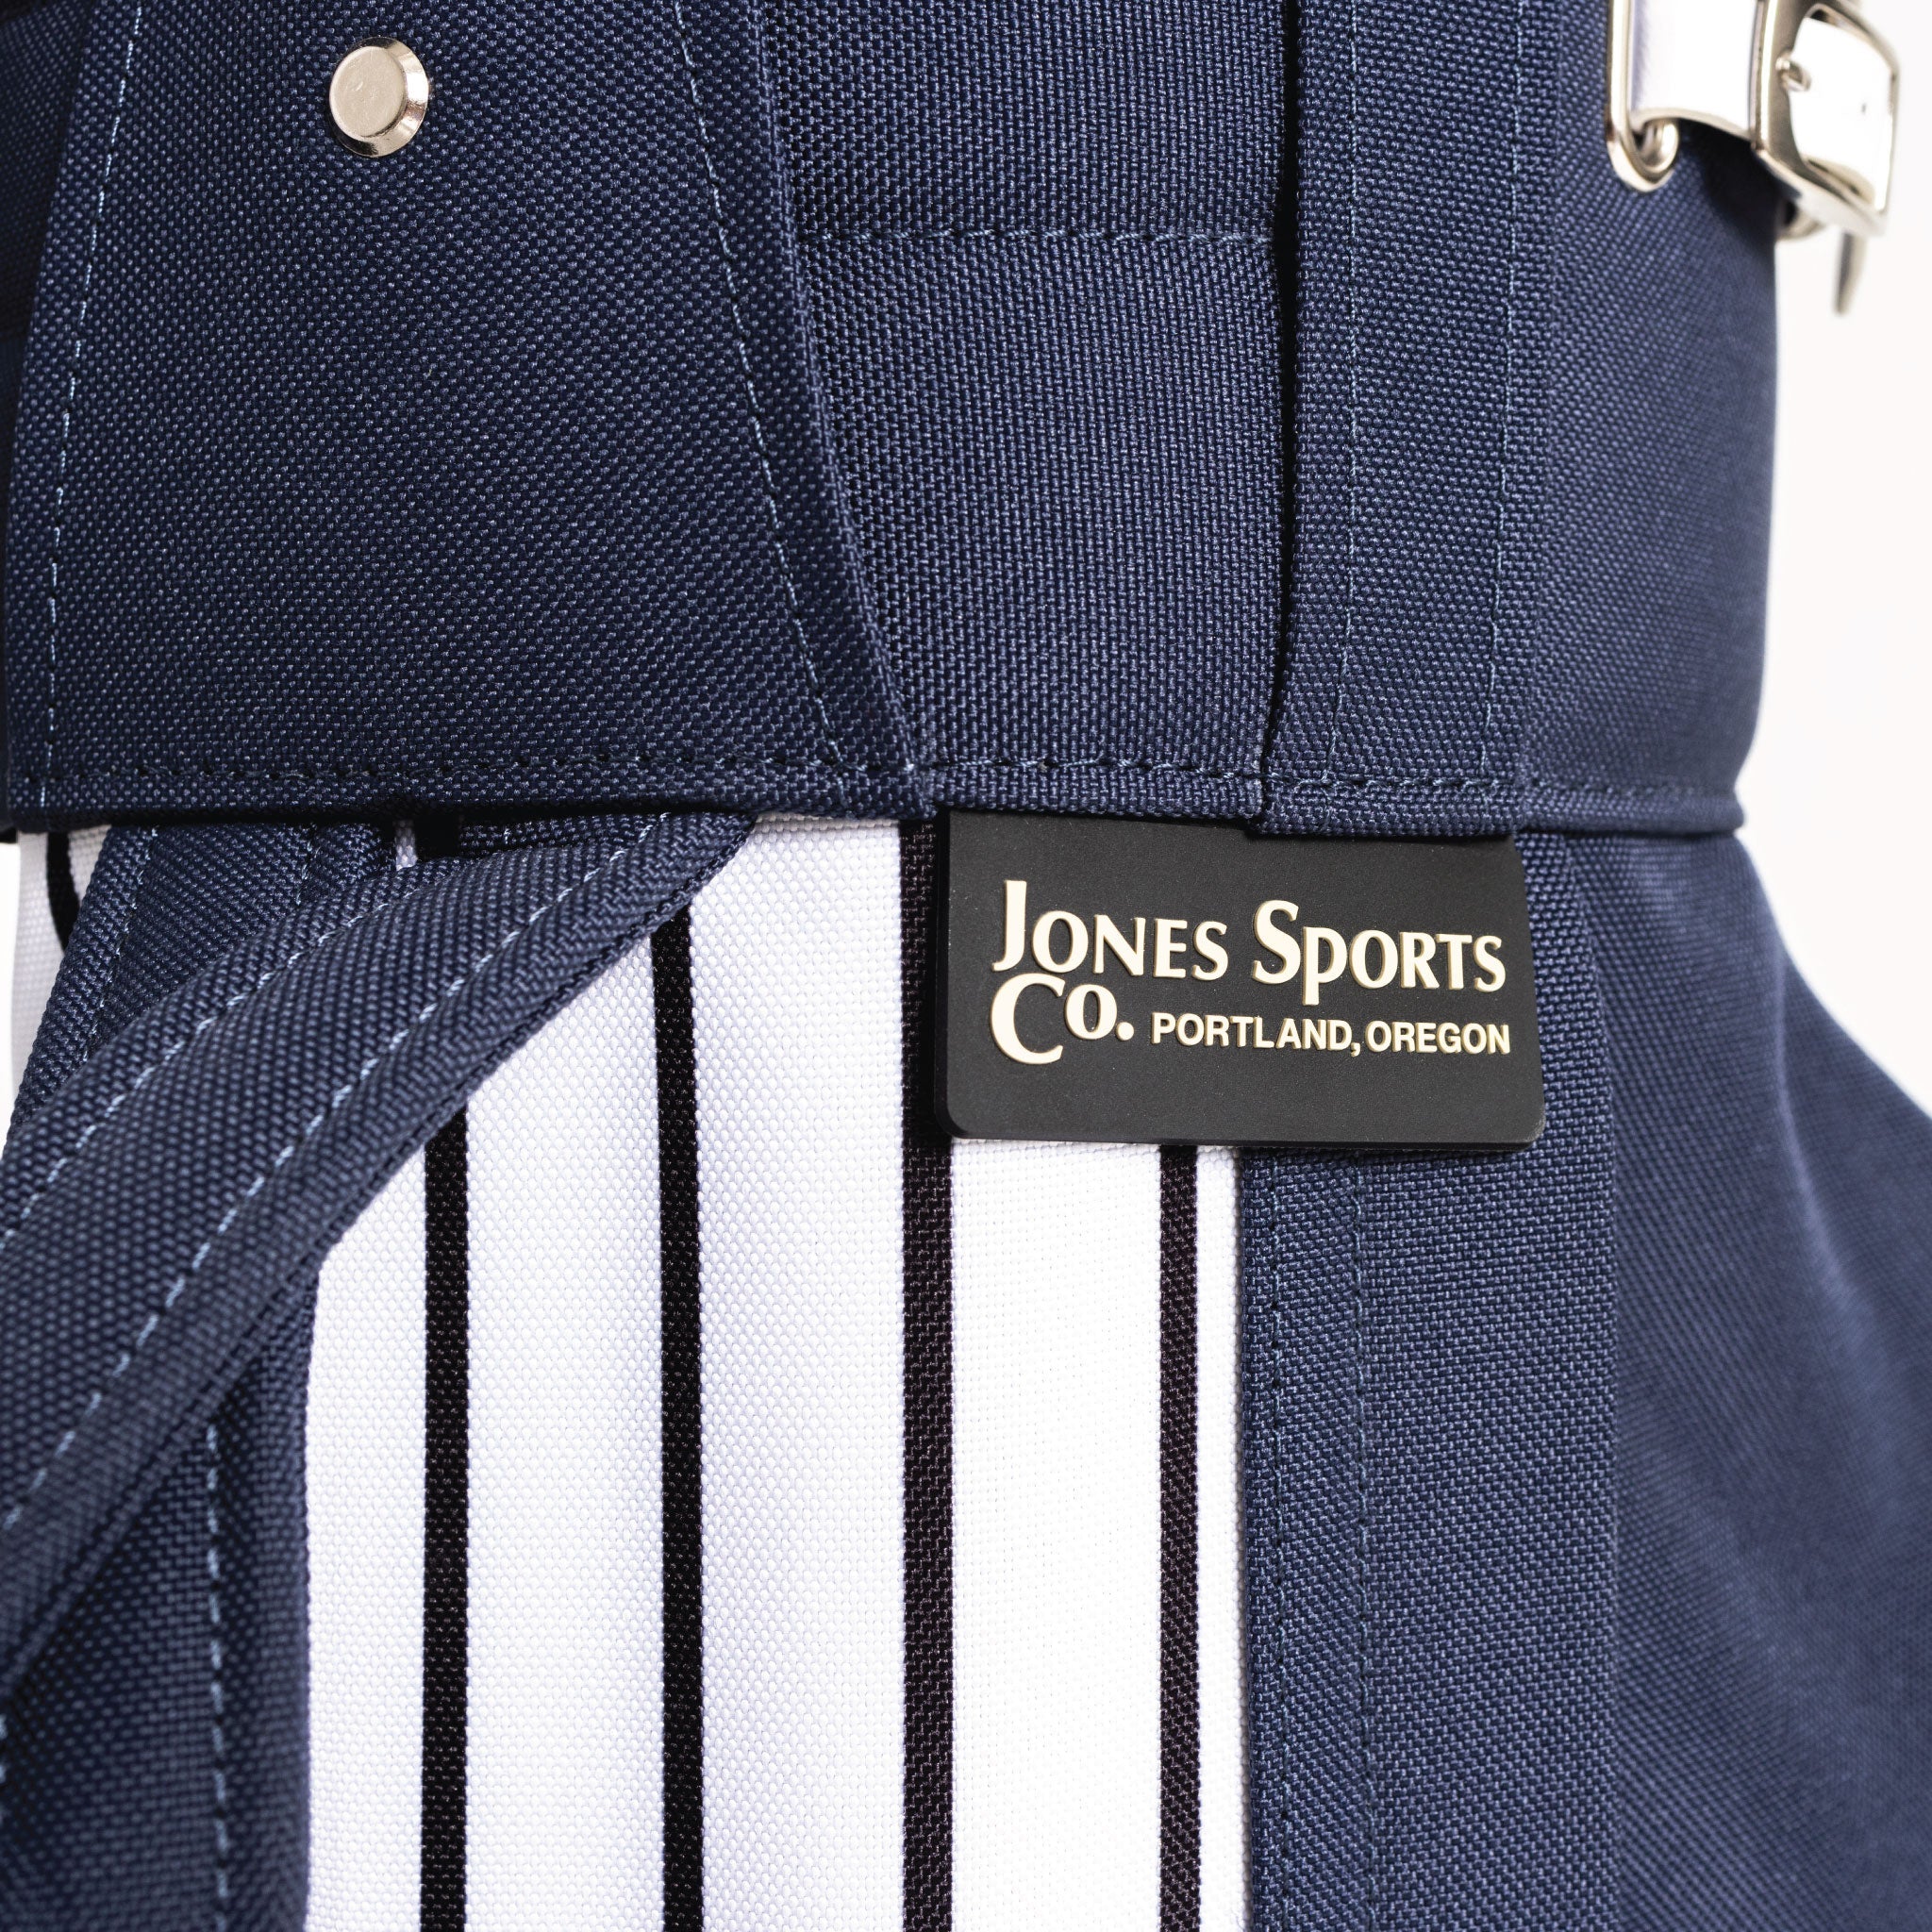 Jones Sports Co. Classic Stand Bag - Navy Pinstripe